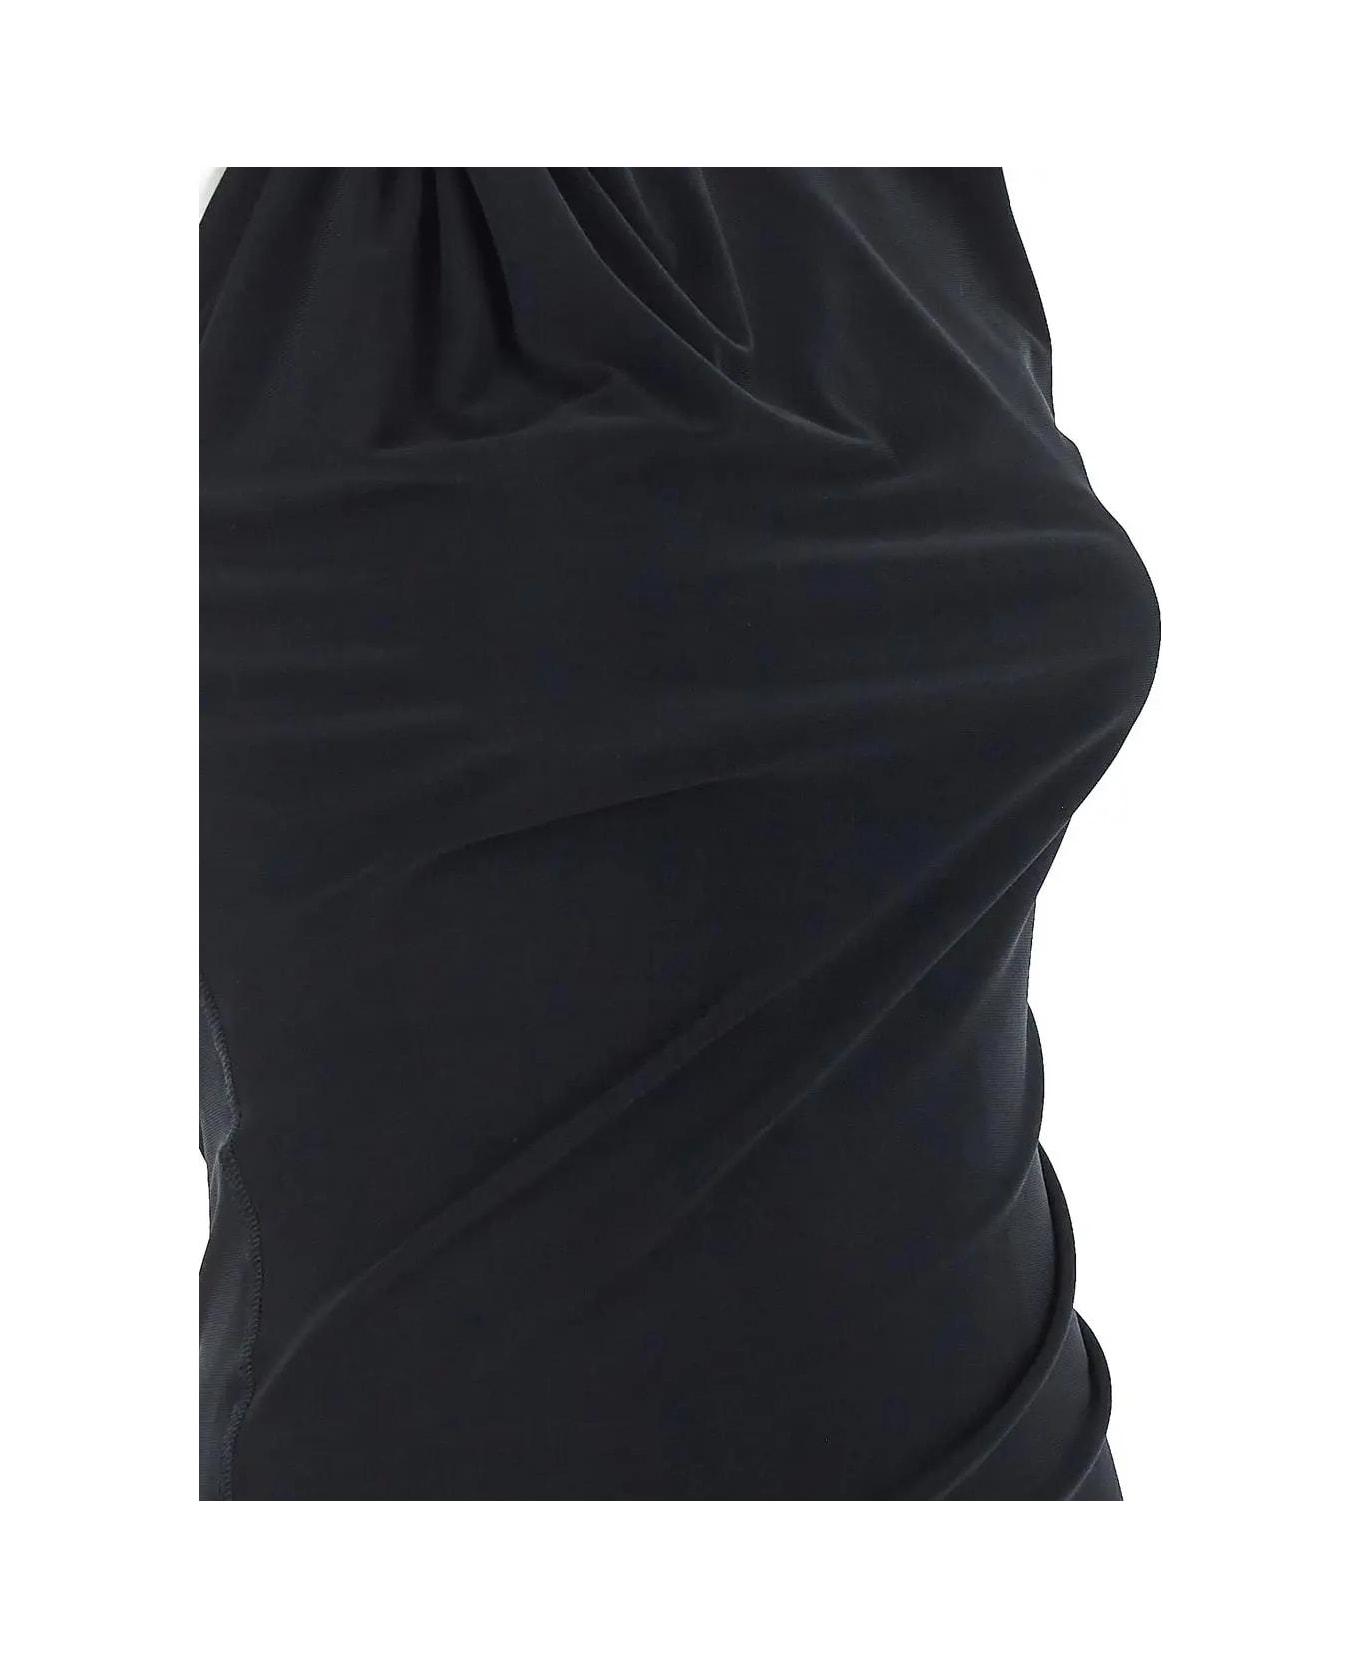 SportMax Nuble Dress - Black